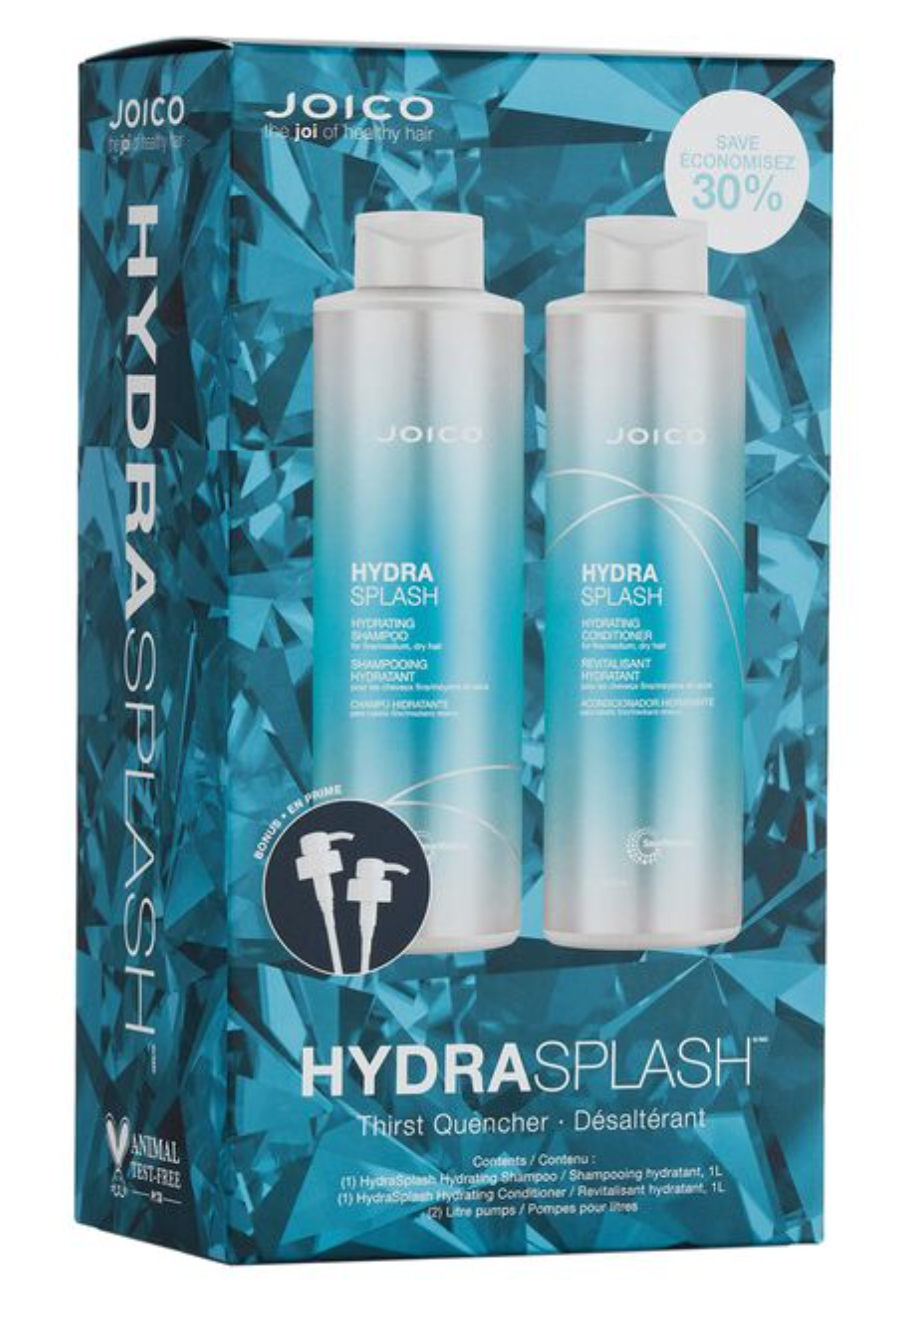 Joico Hydrasplash Shampoo & Conditioner Duo